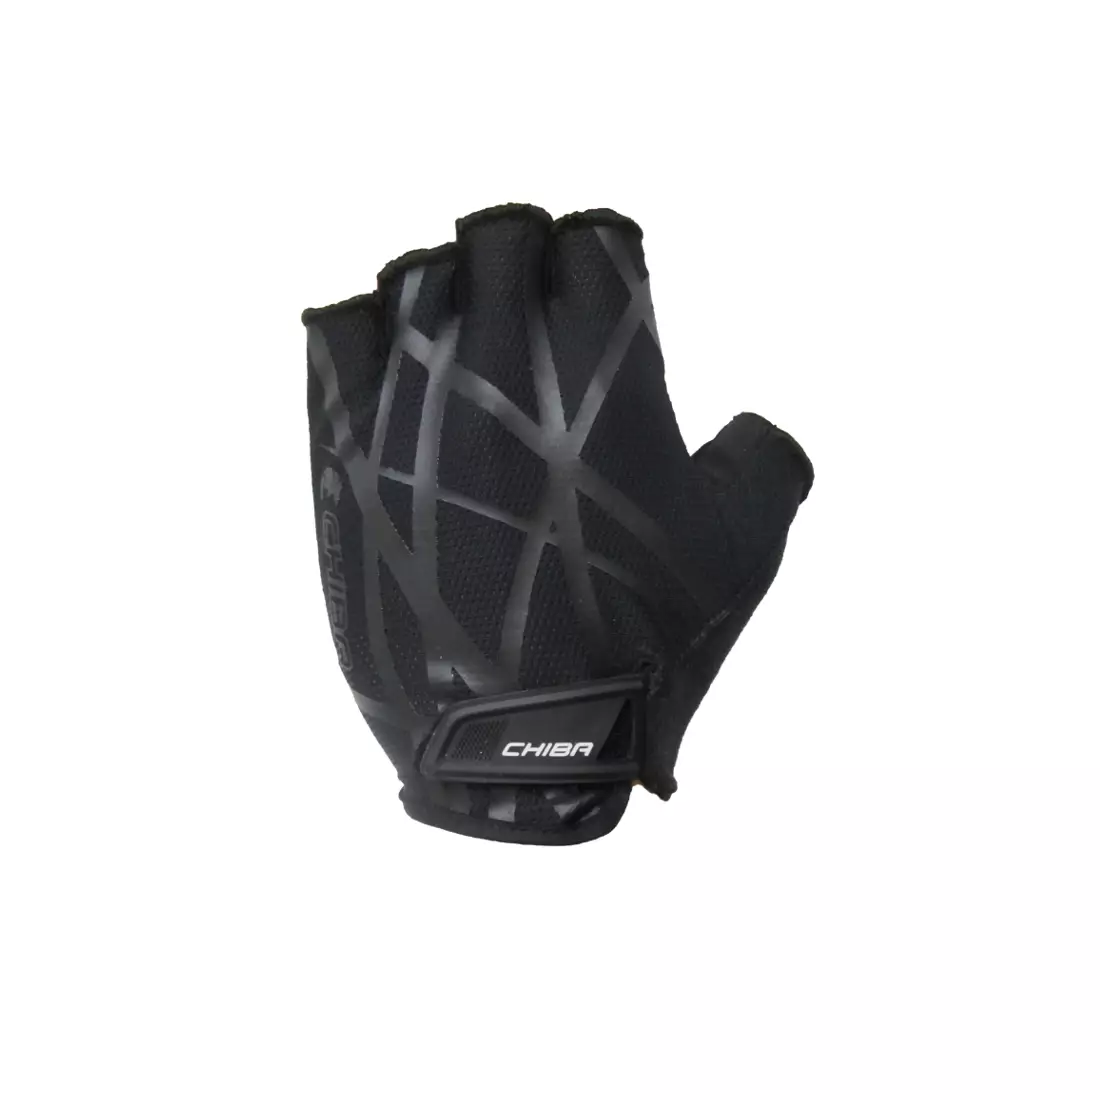 CHIBA STING RAY cycling gloves, black